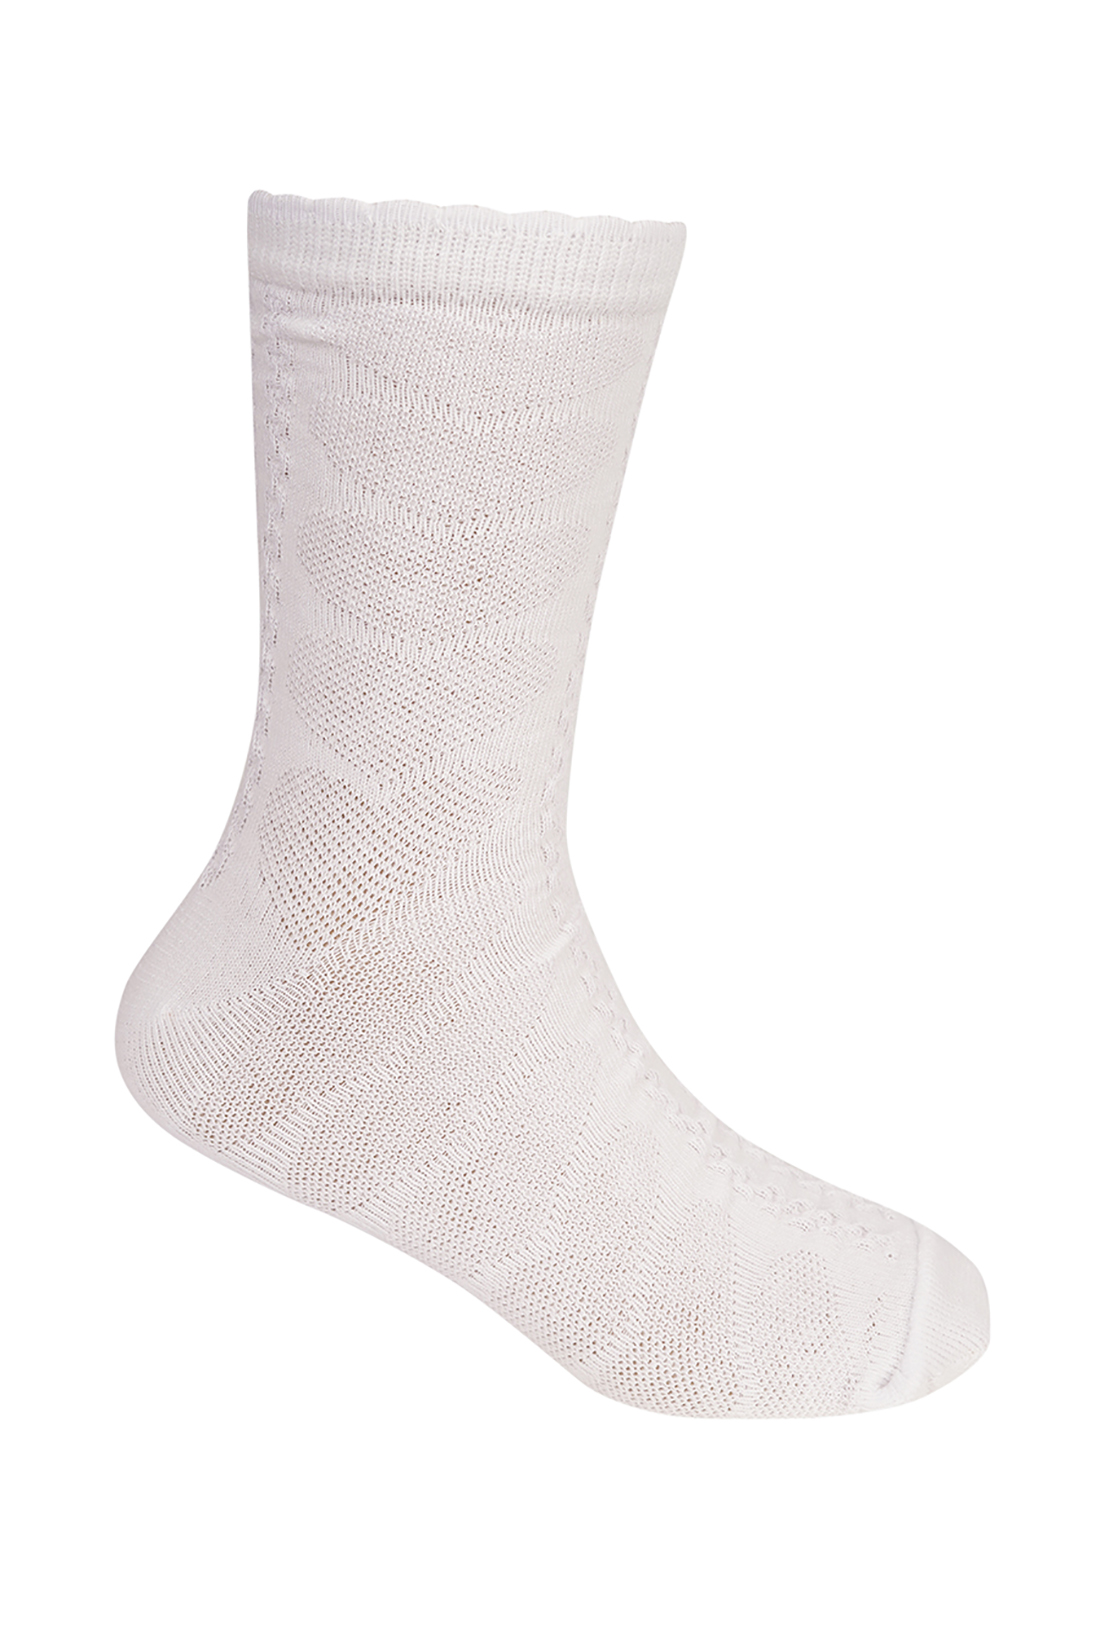 Носки для девочки (арт. baon BK390010), размер 29/31, цвет белый